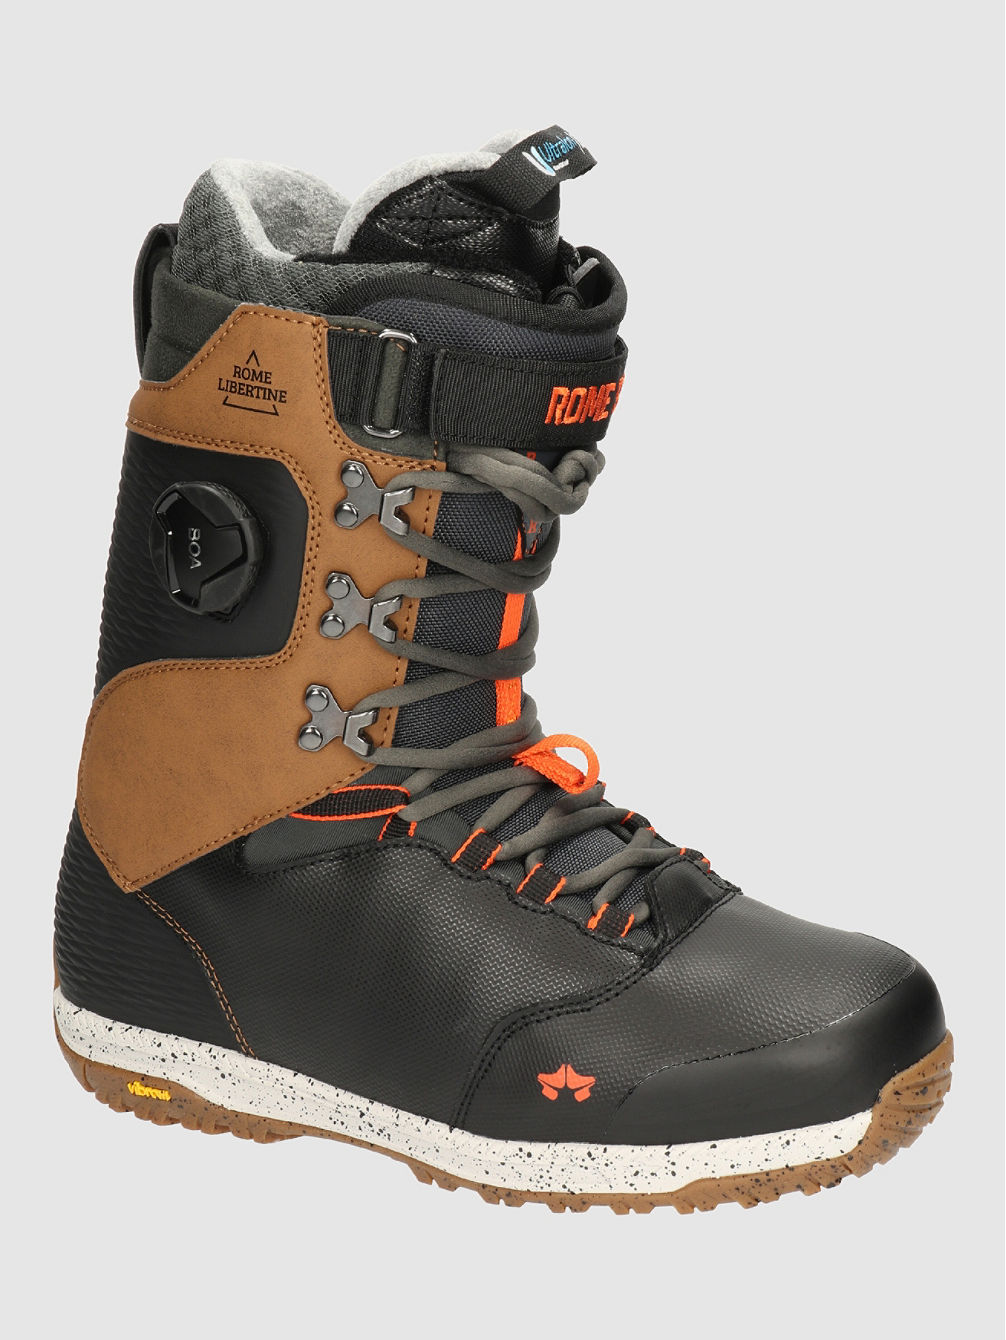 Libertine Hybrid Boa 2022 Snowboard-Boots